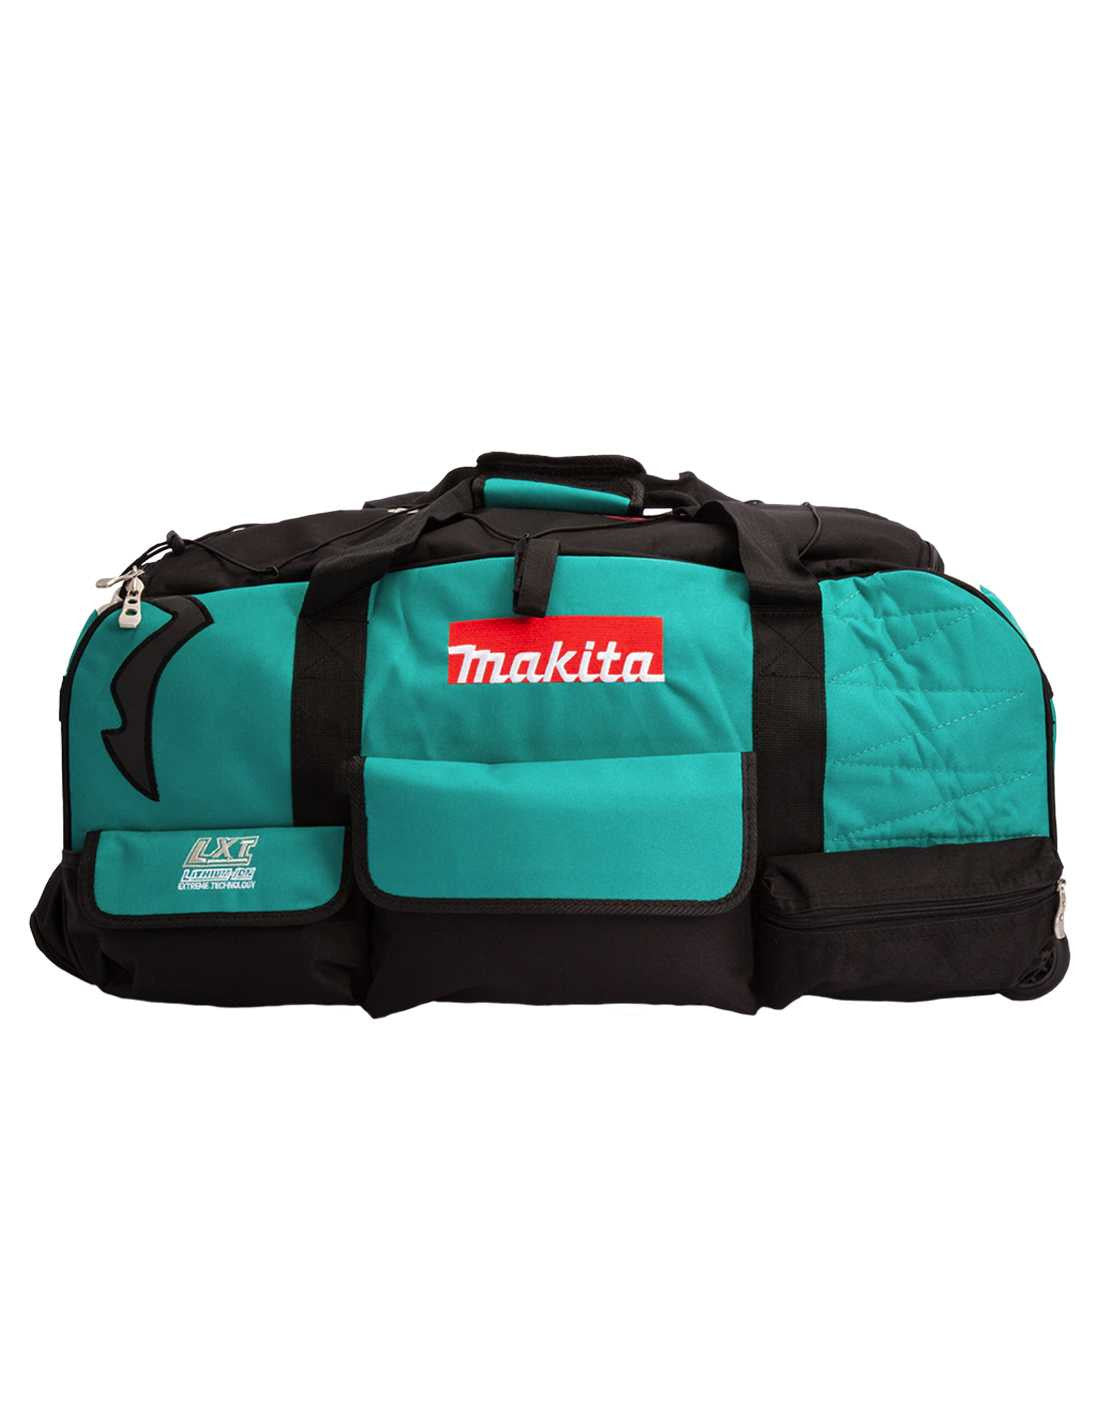 Makita Kit 7 Werkzeuge + DC18RC Ladegerät + 3bat 5Ah + 2 Taschen LXT600 DLX7482BL3